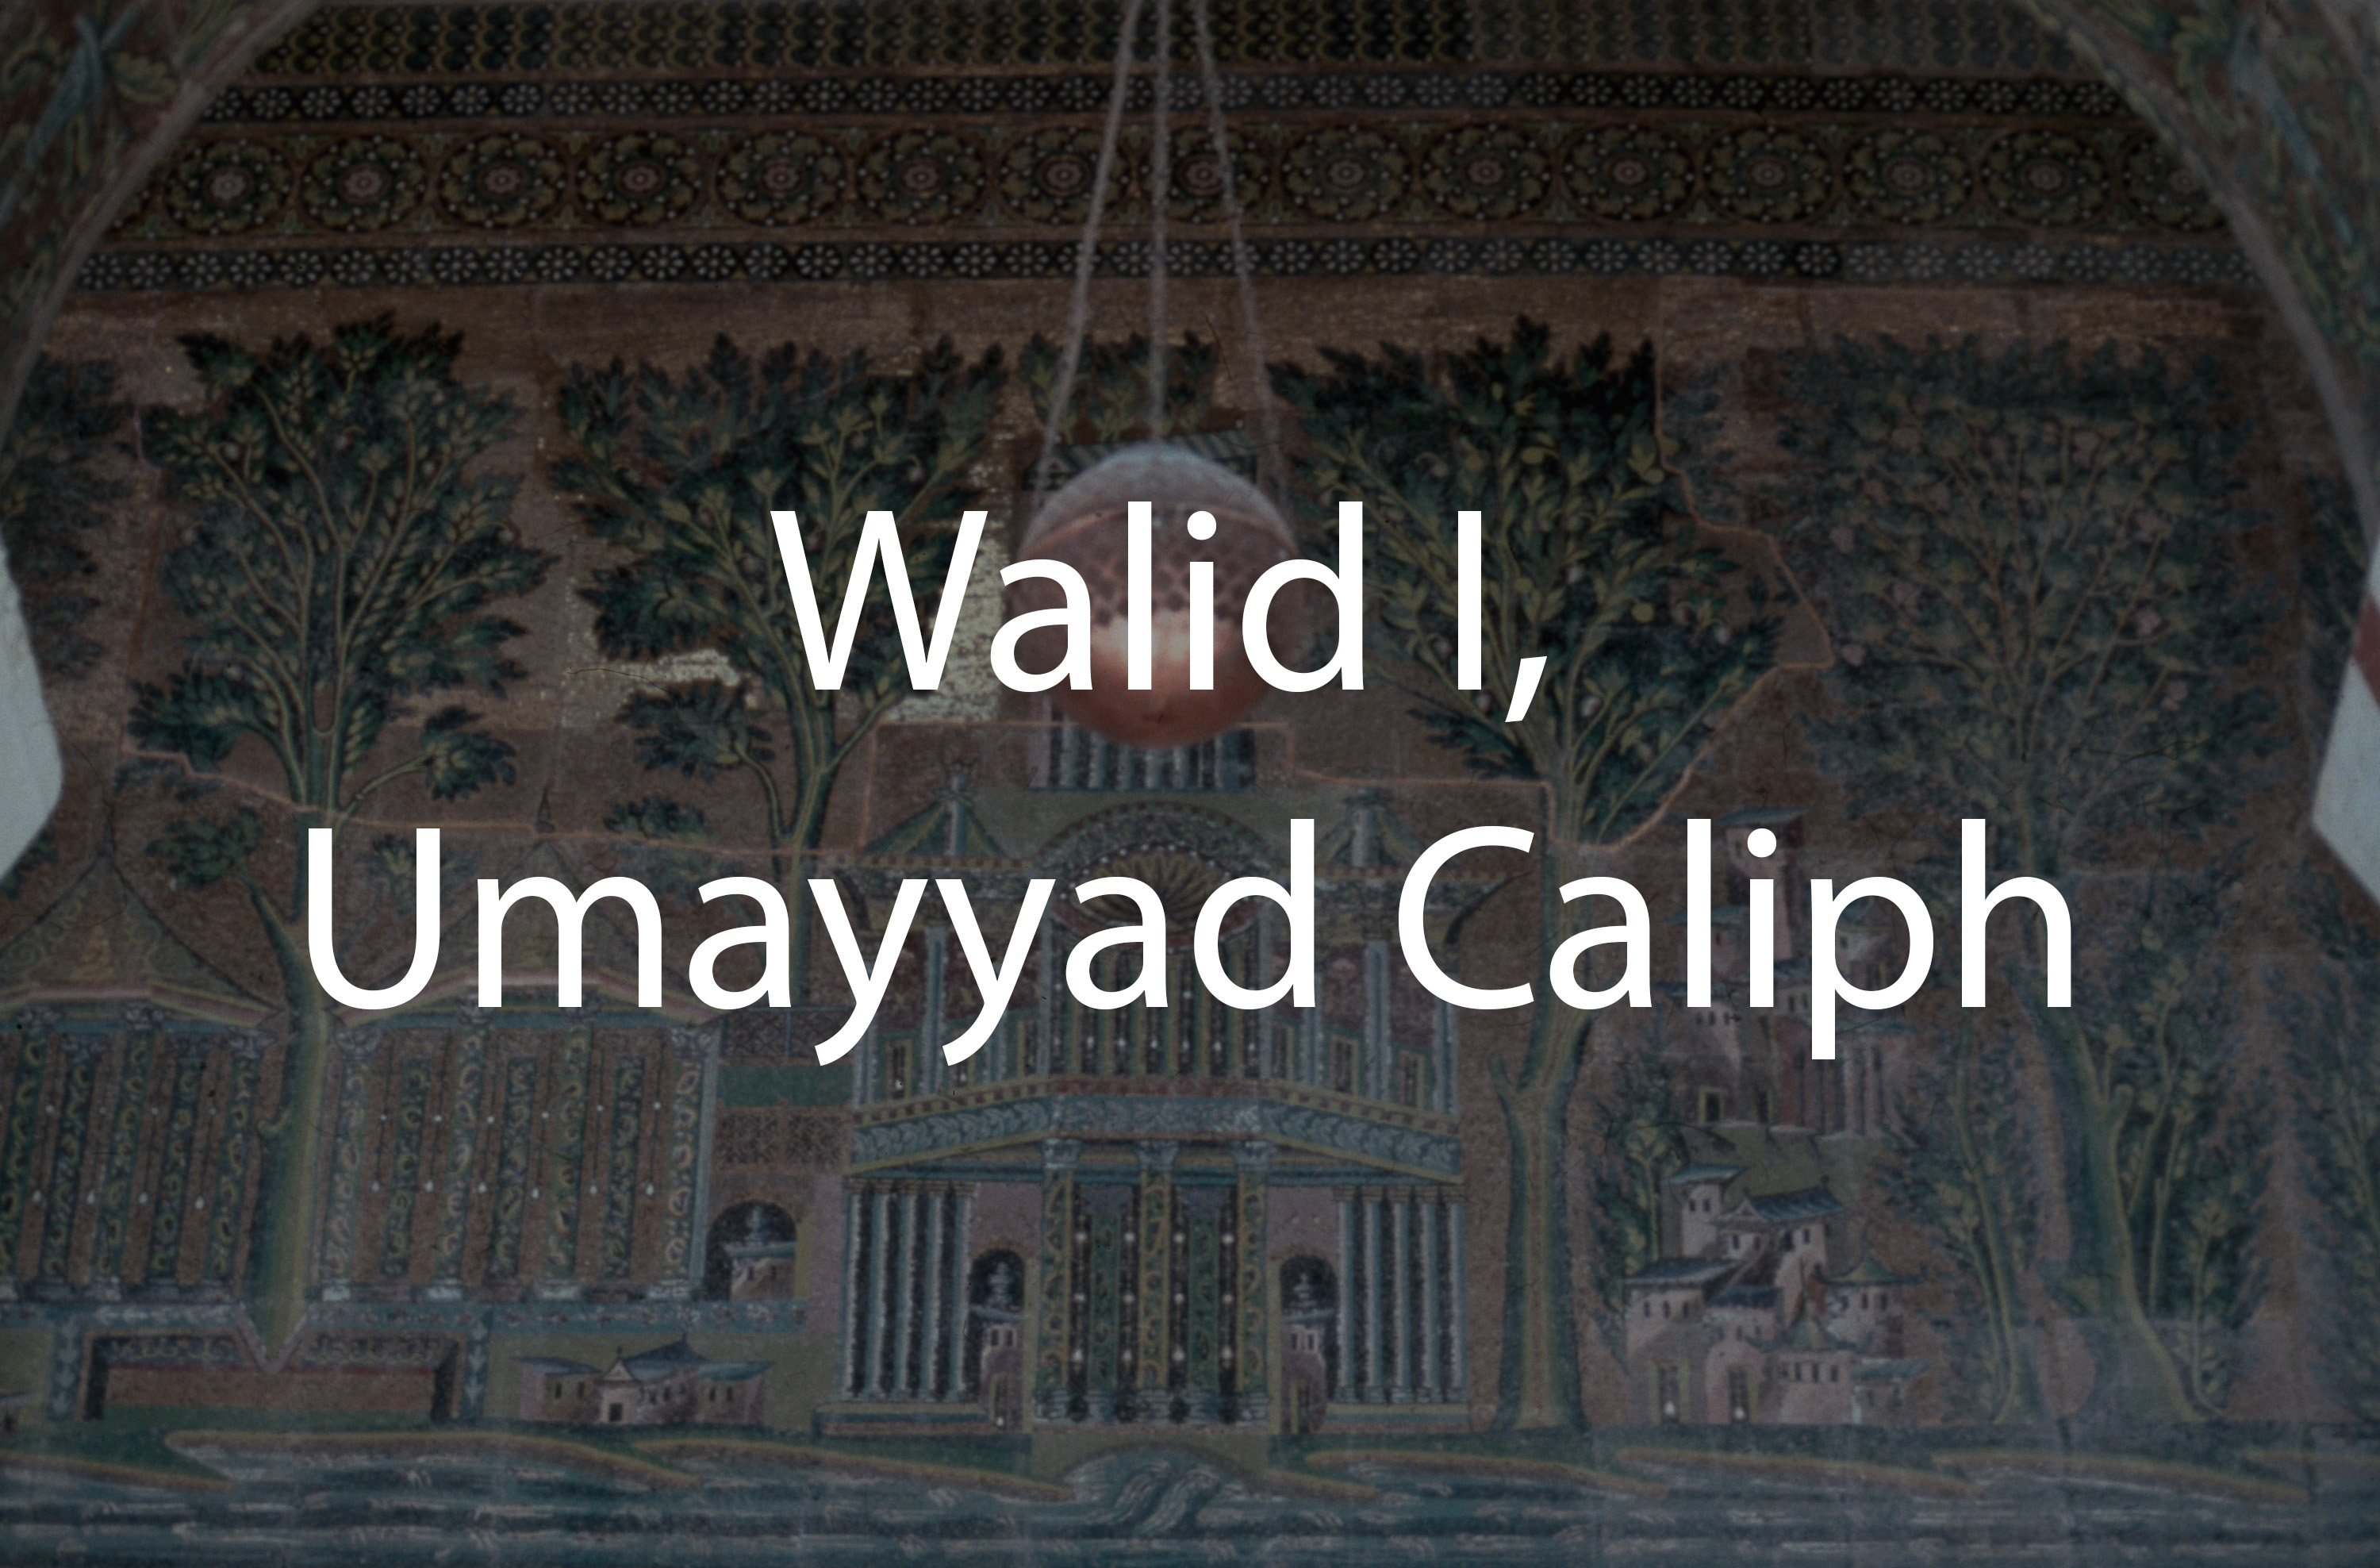  Walid I, Umayyad Caliph